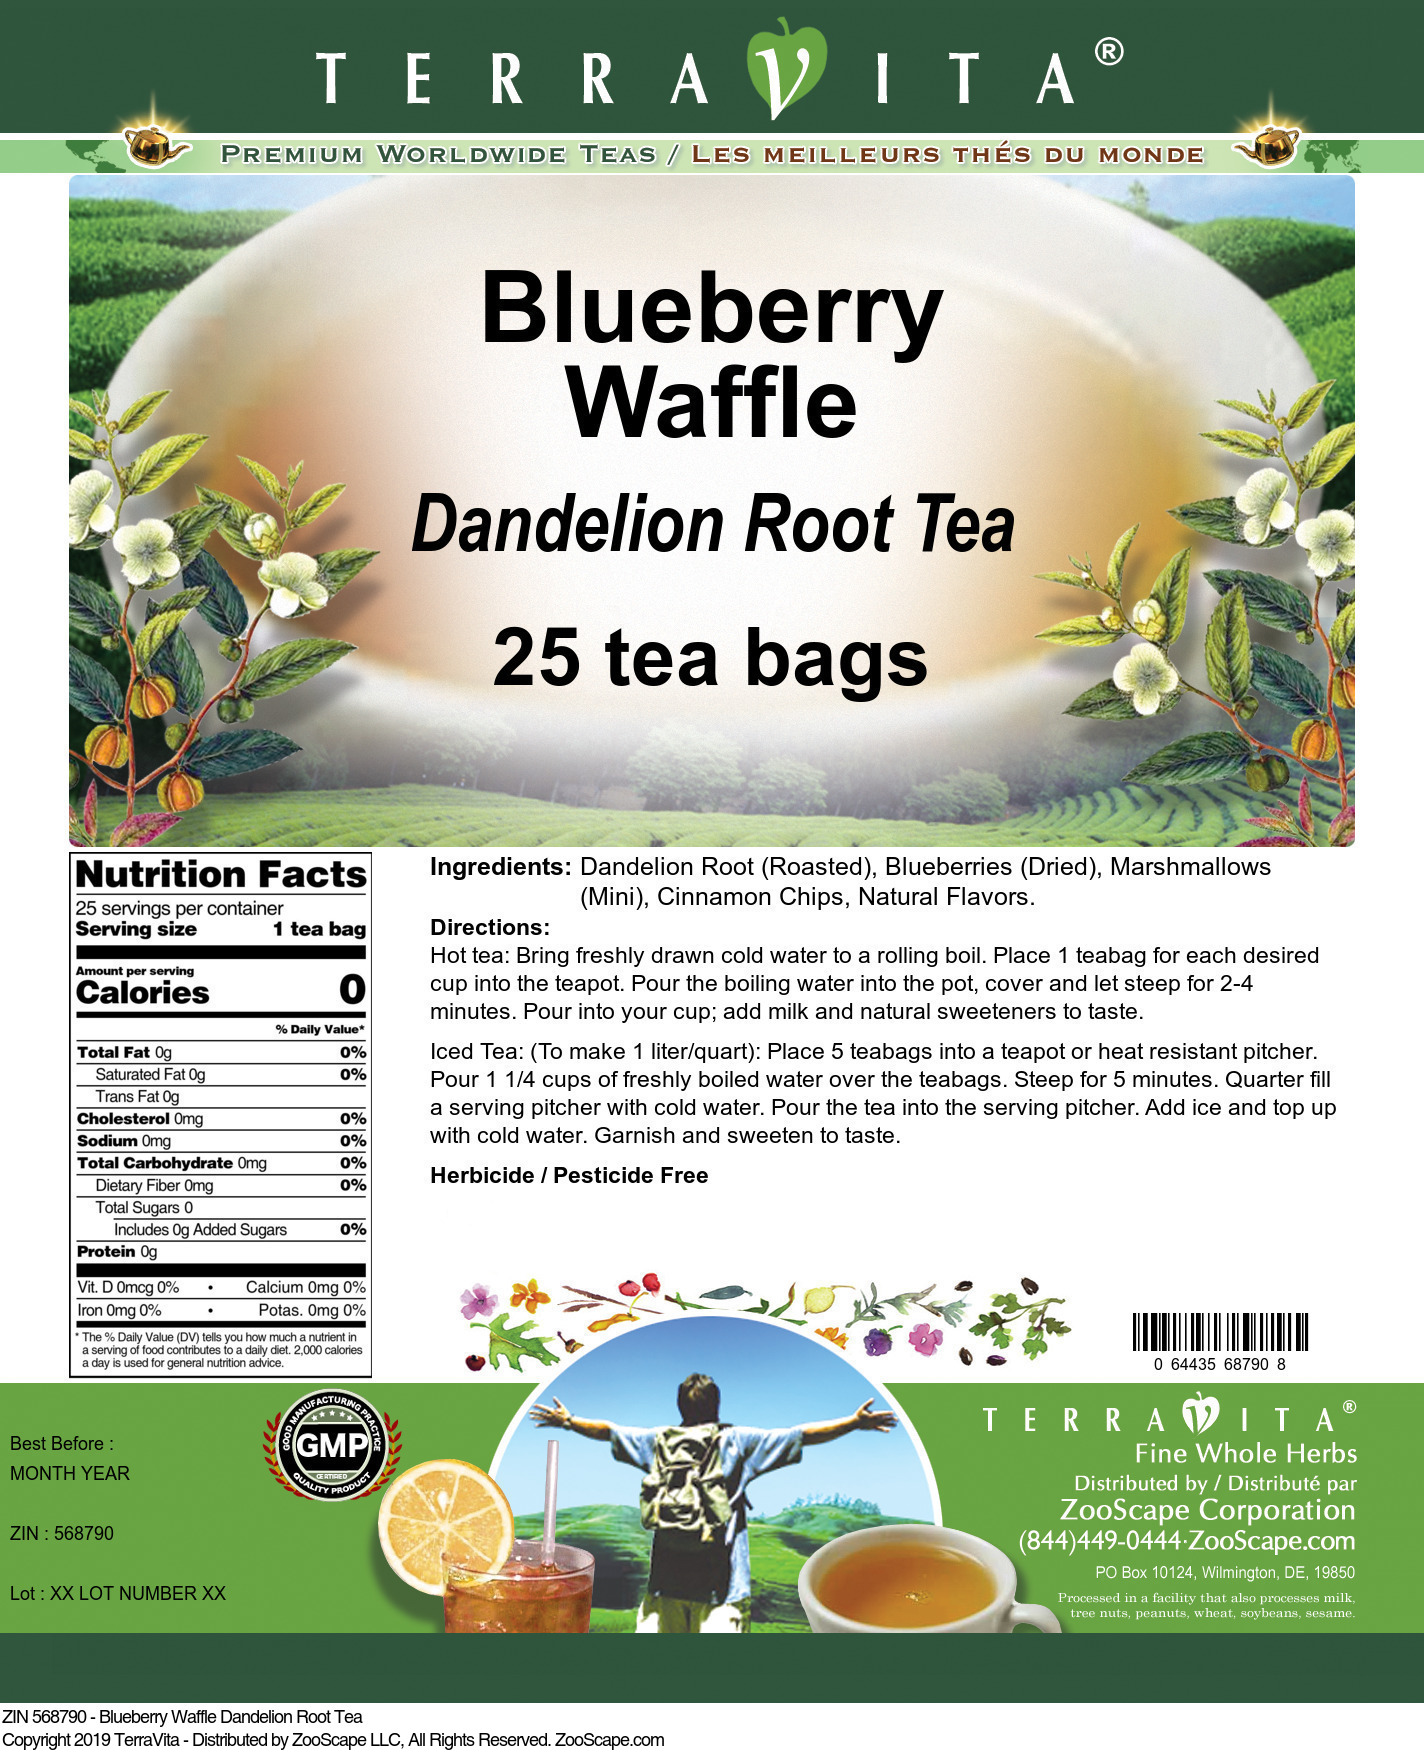 Blueberry Waffle Dandelion Root Tea - Label